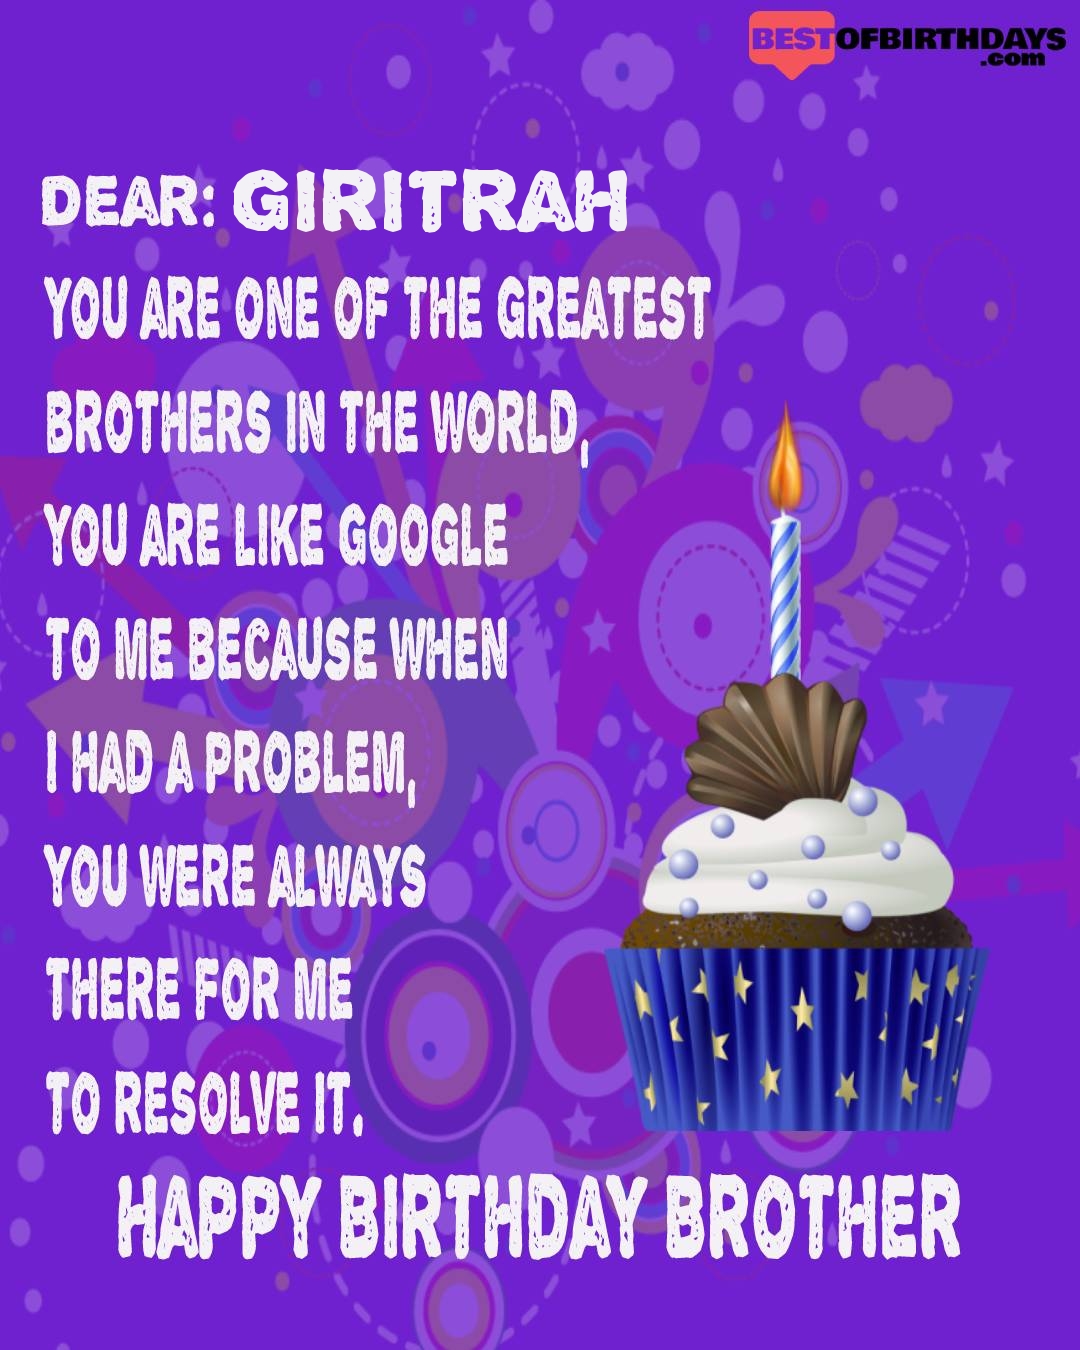 Happy birthday giritrah bhai brother bro